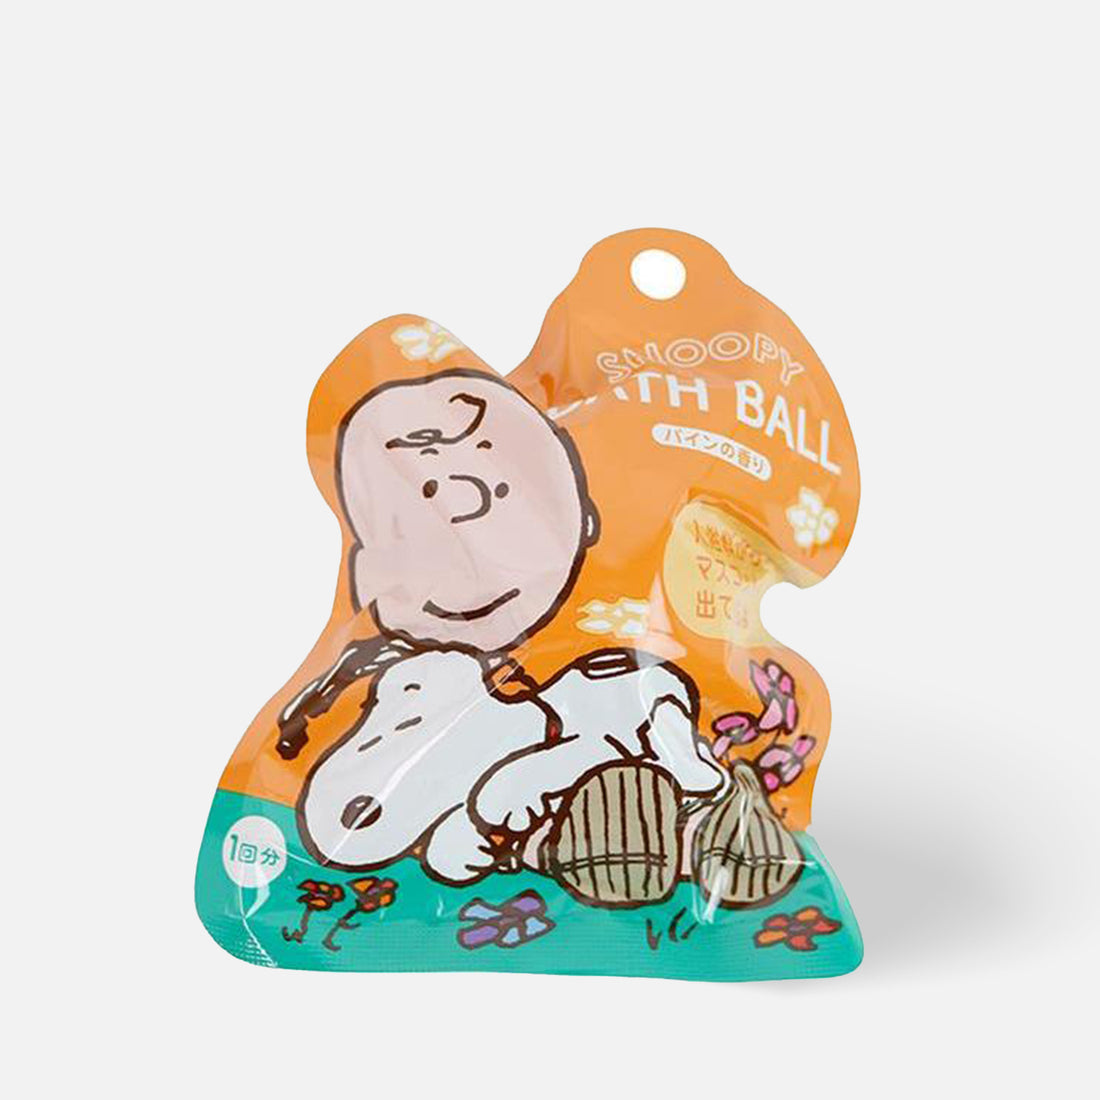 Santan Snoopy Bath Ball 75g